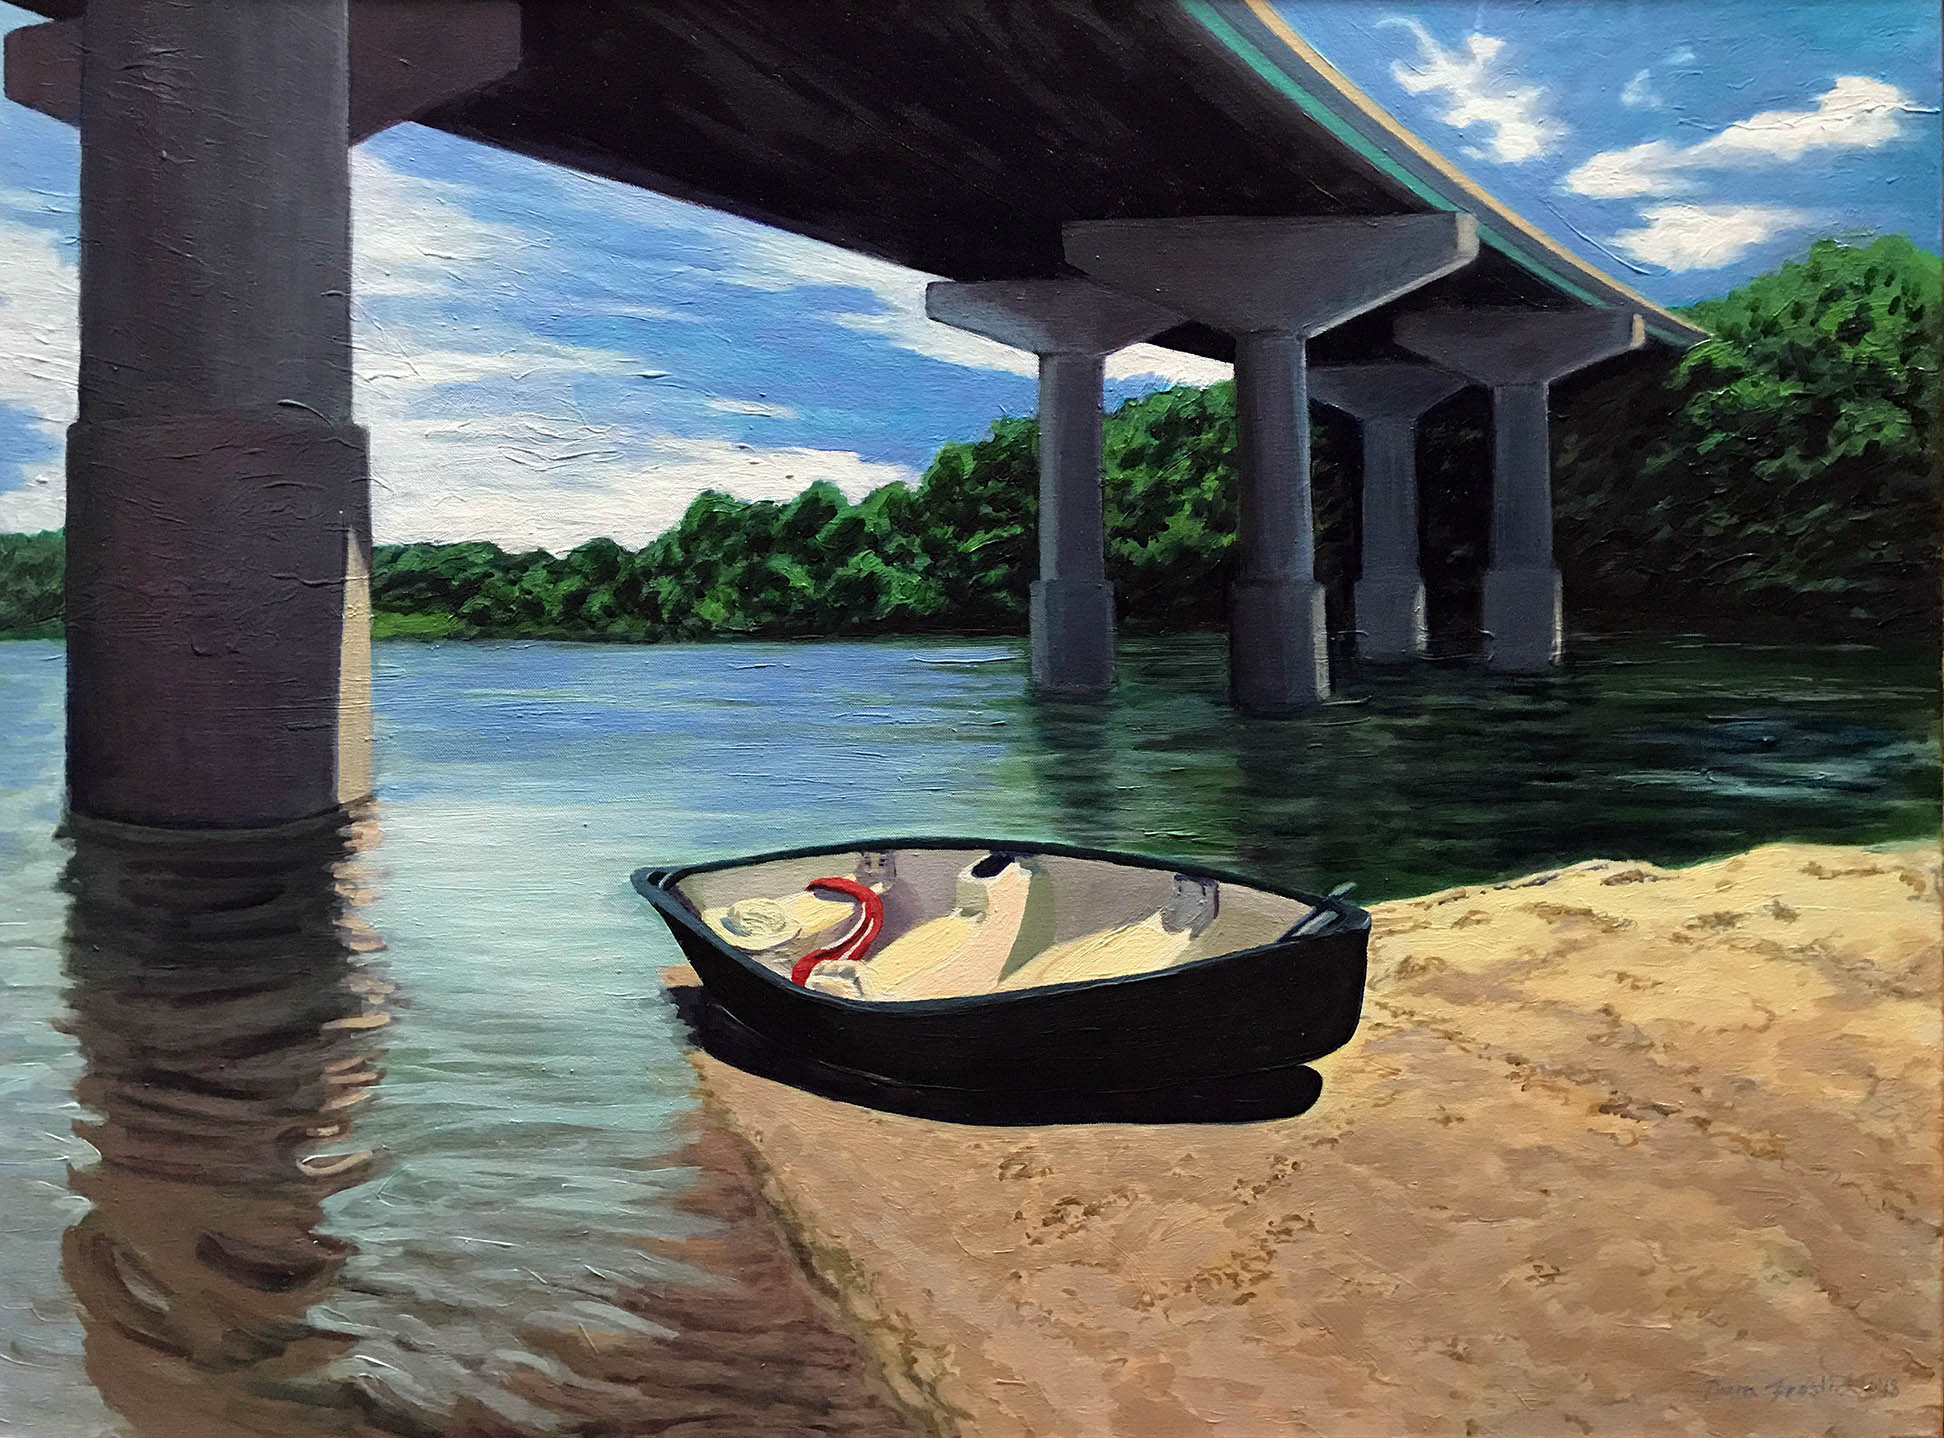 Underneath Wiley Bridge with a Canoe